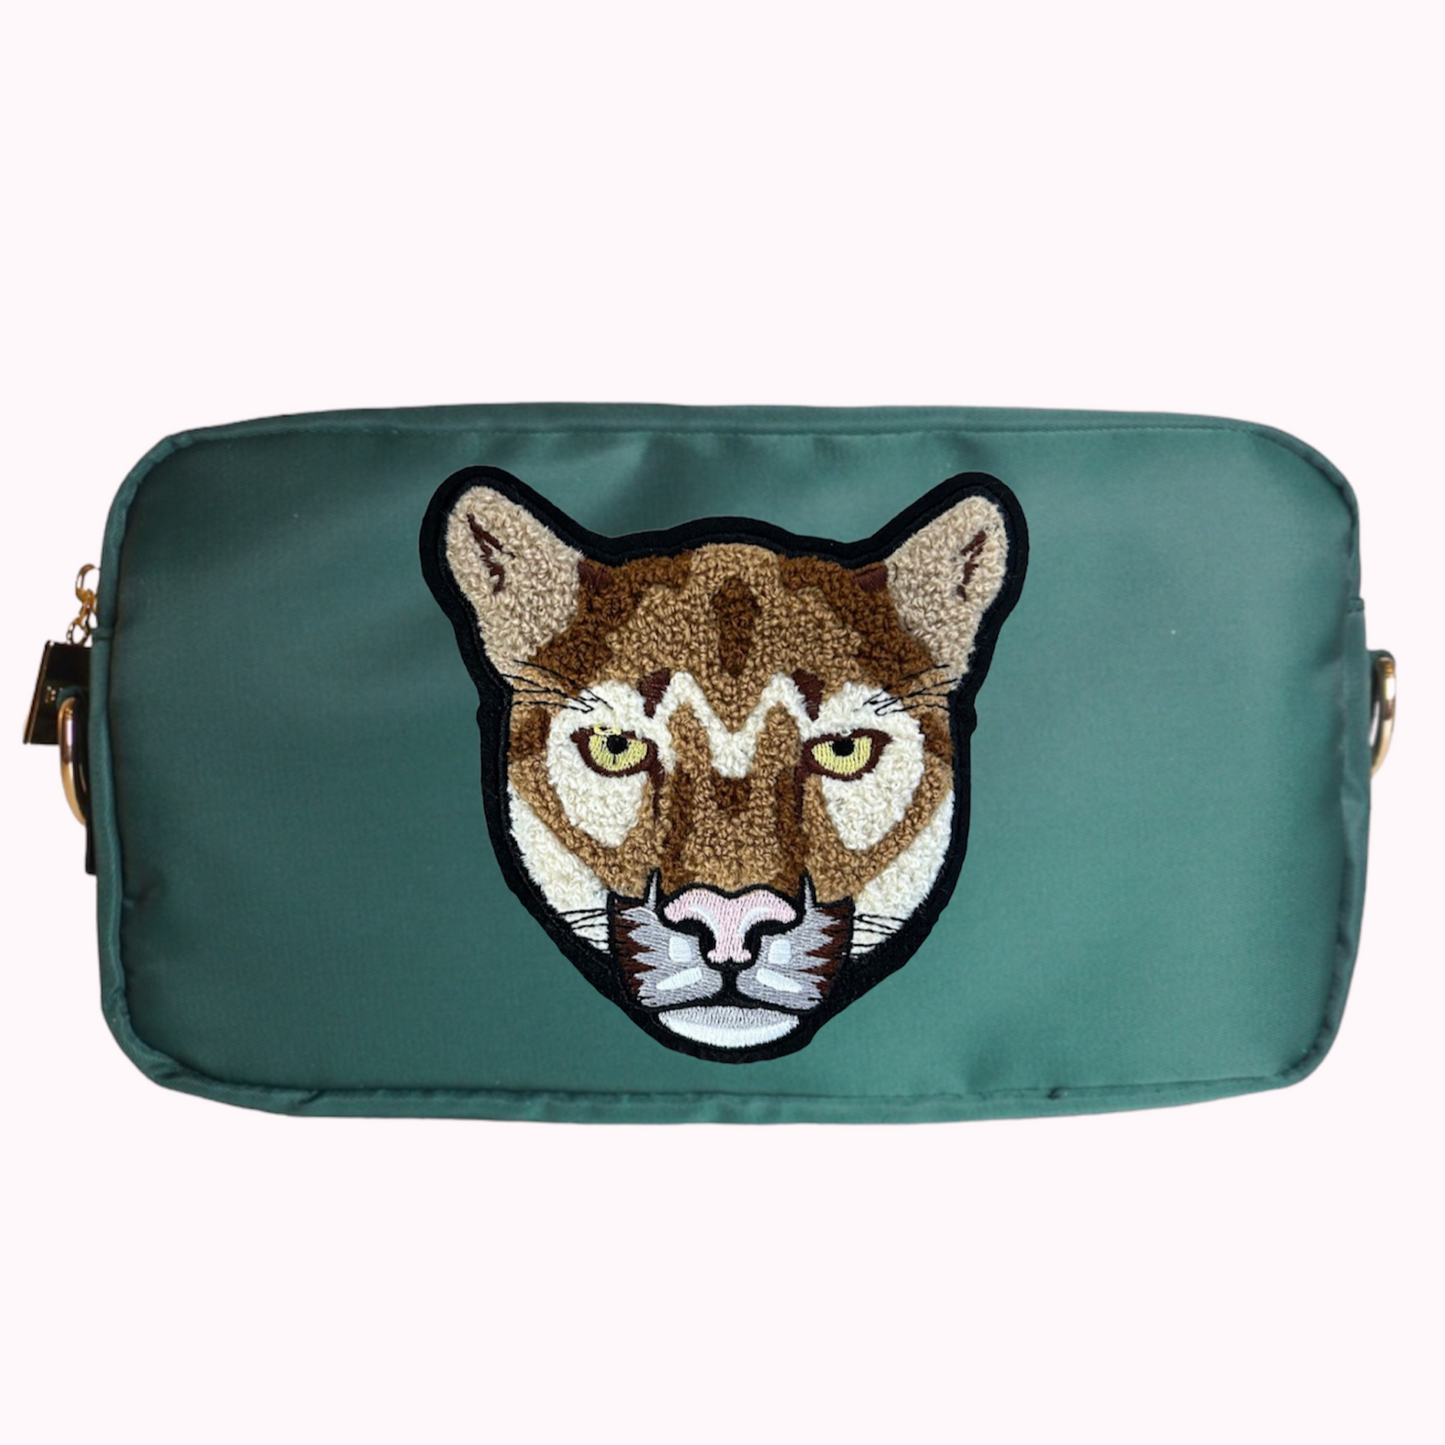 Green medium crossbody bag with cougar patch. 